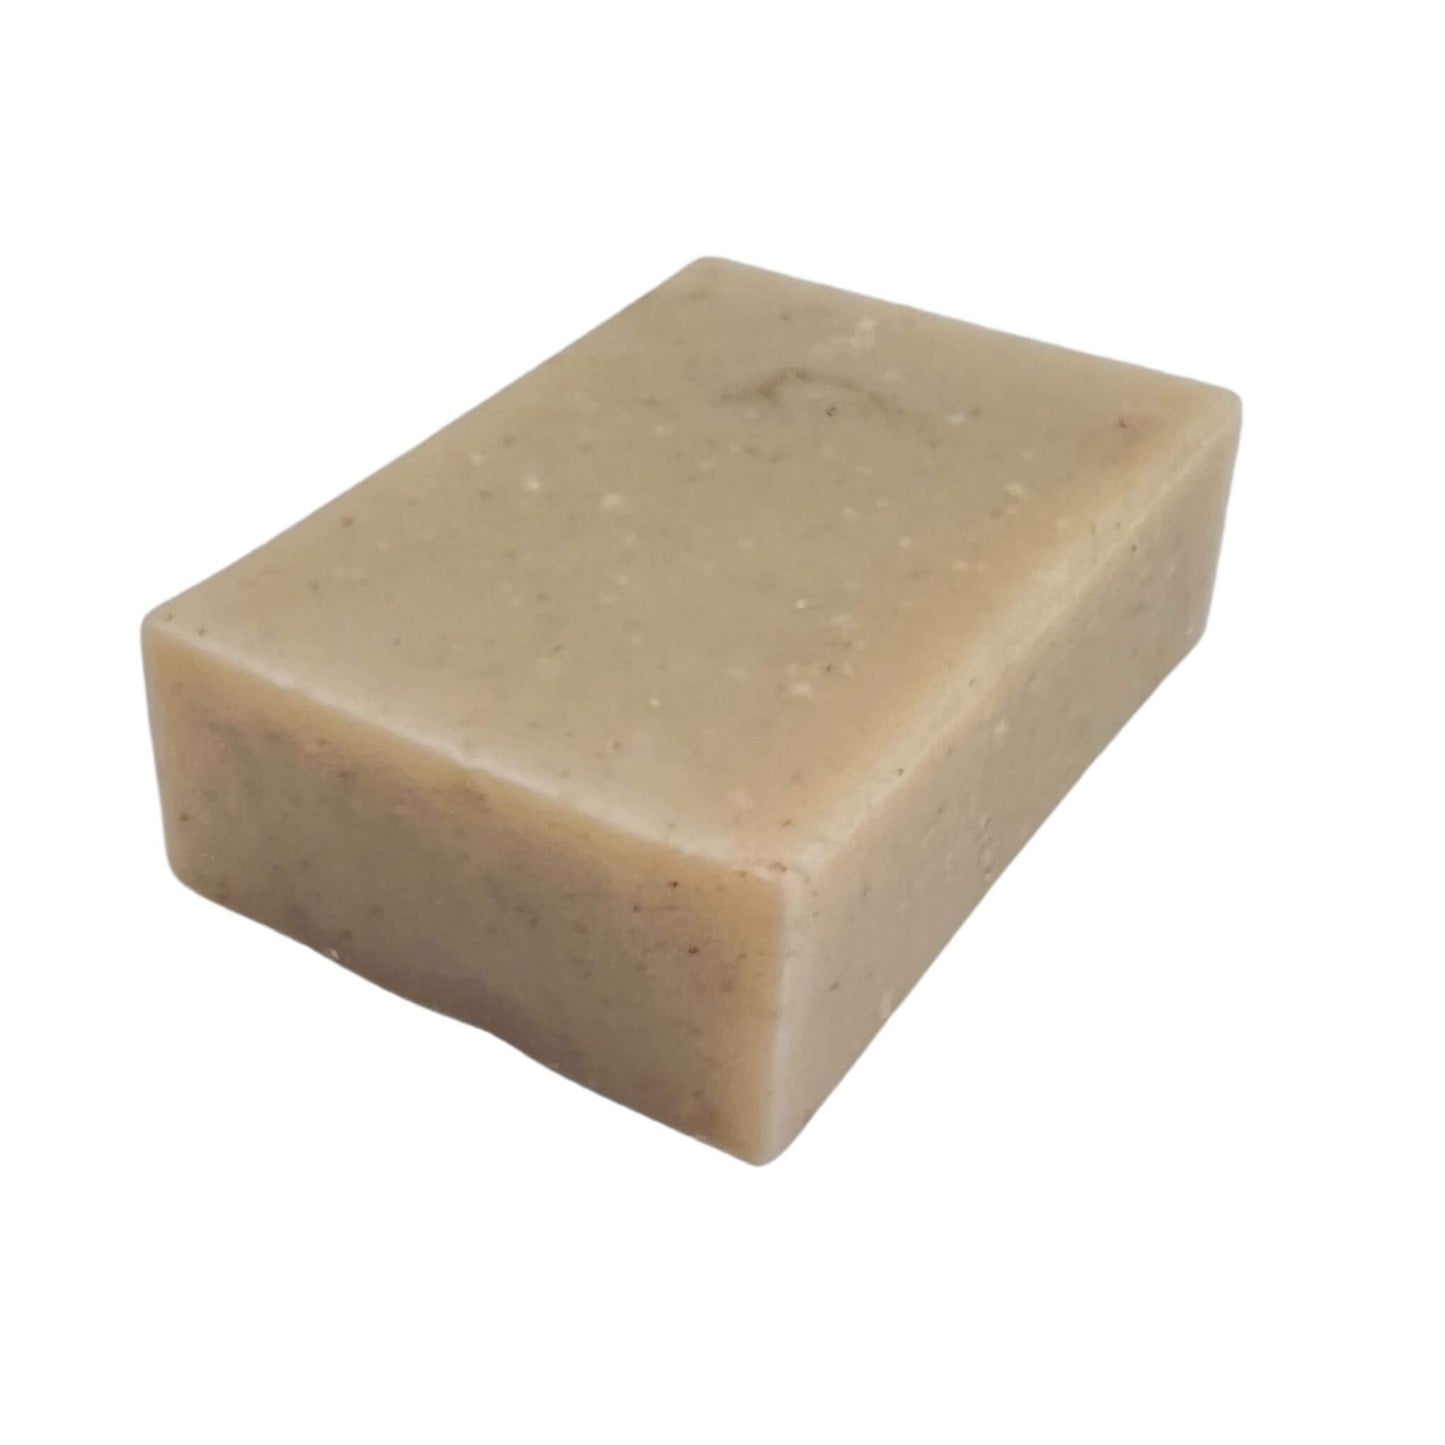 solid shampoo Bar lemon eucalyptus mint. Brazilian clay, coconut, shea butter, macadamia. Toxin-free. moss & pear